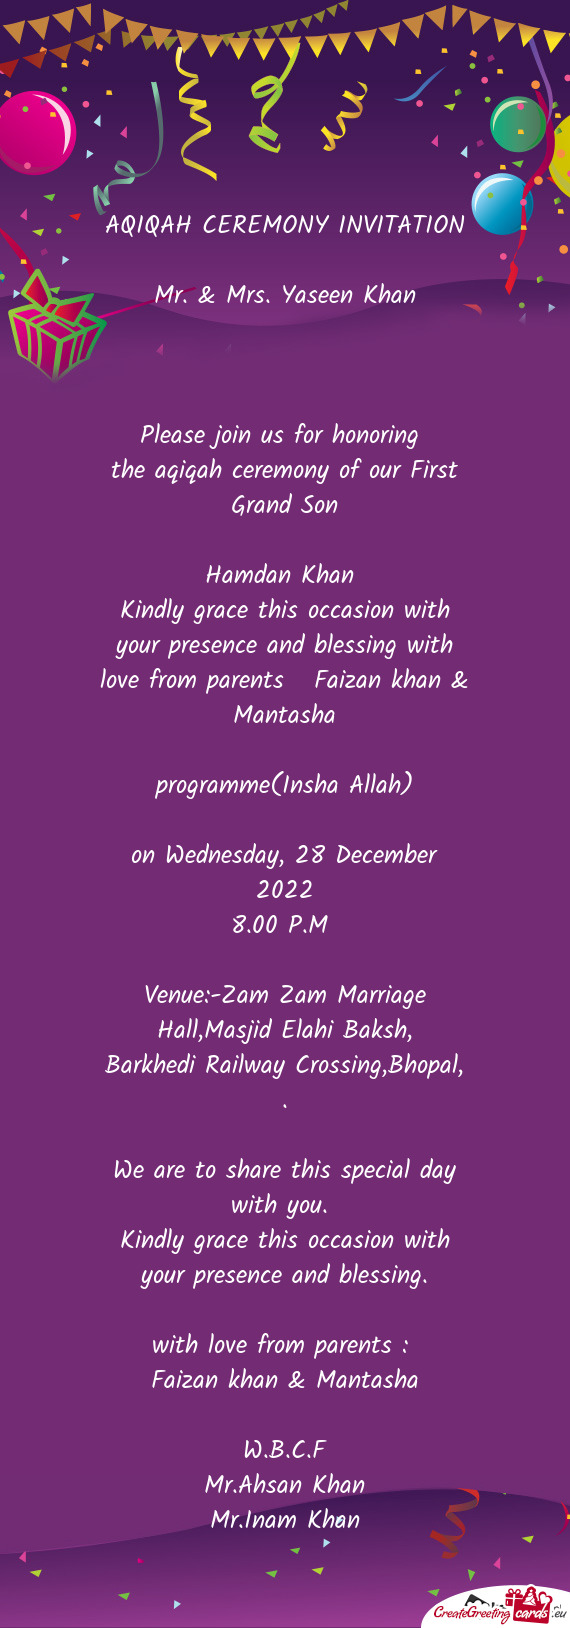 Programme(Insha Allah)